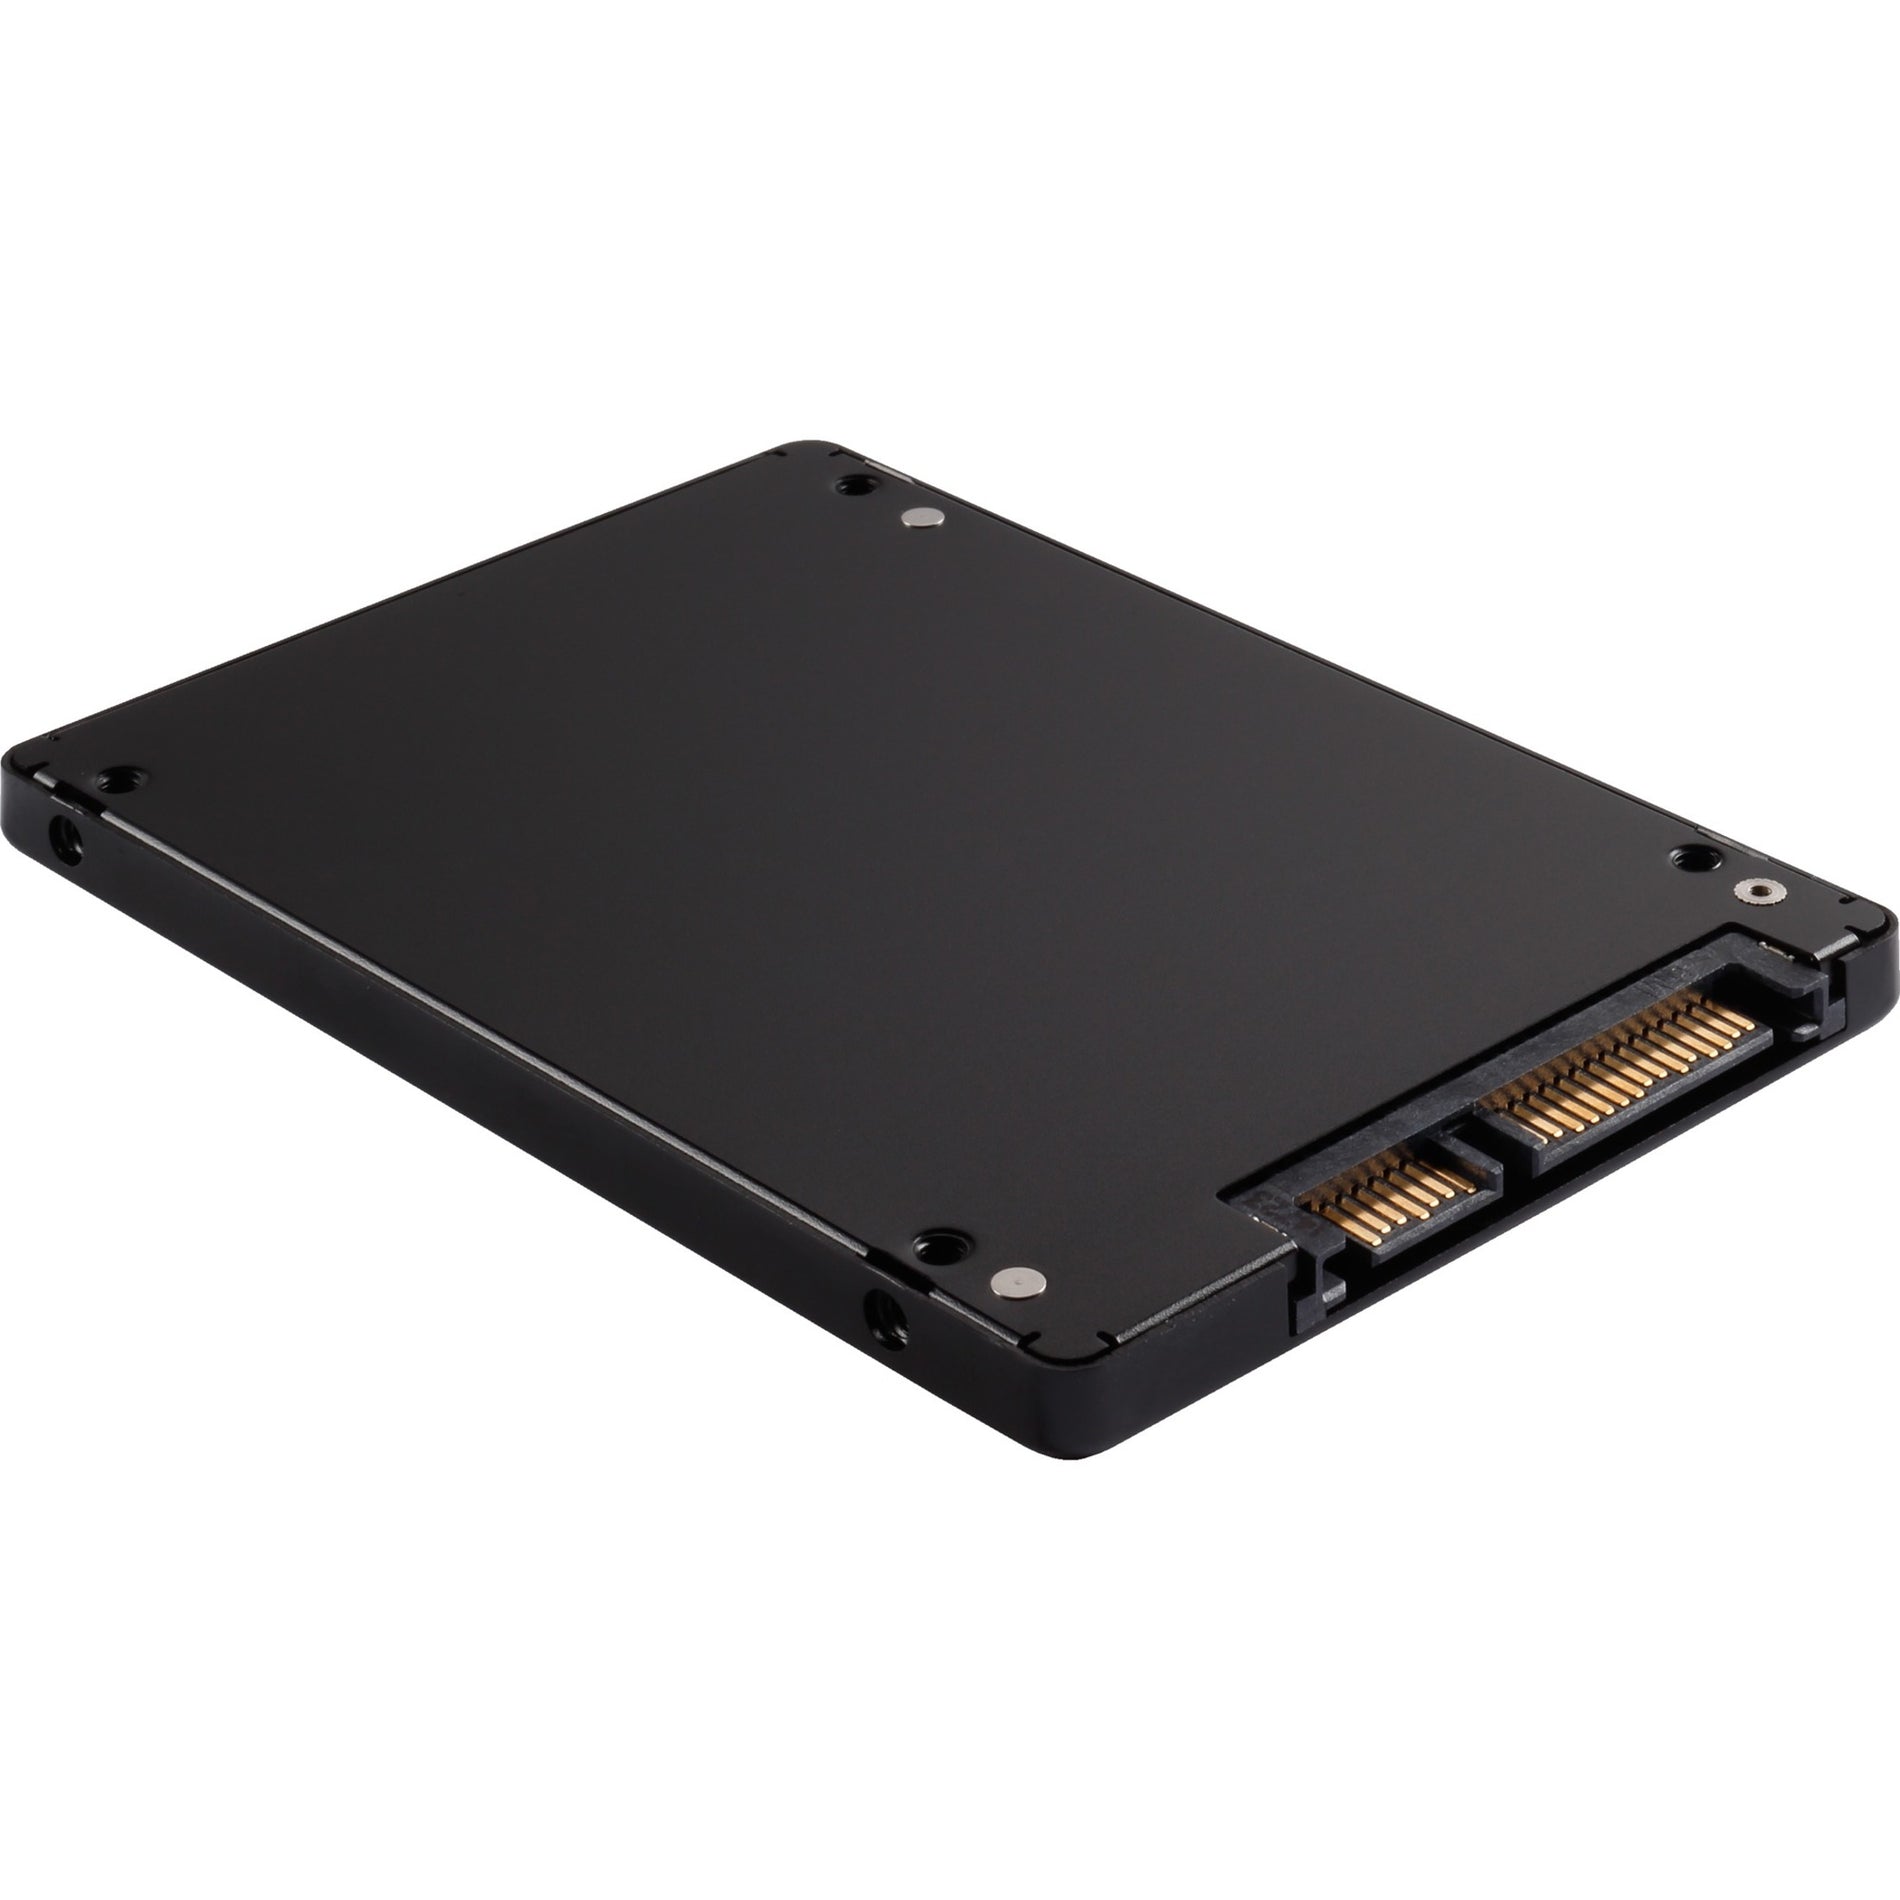 VisionTek 901297 PRO HXS 7mm 2.5" SSD Series, 512GB Storage Capacity